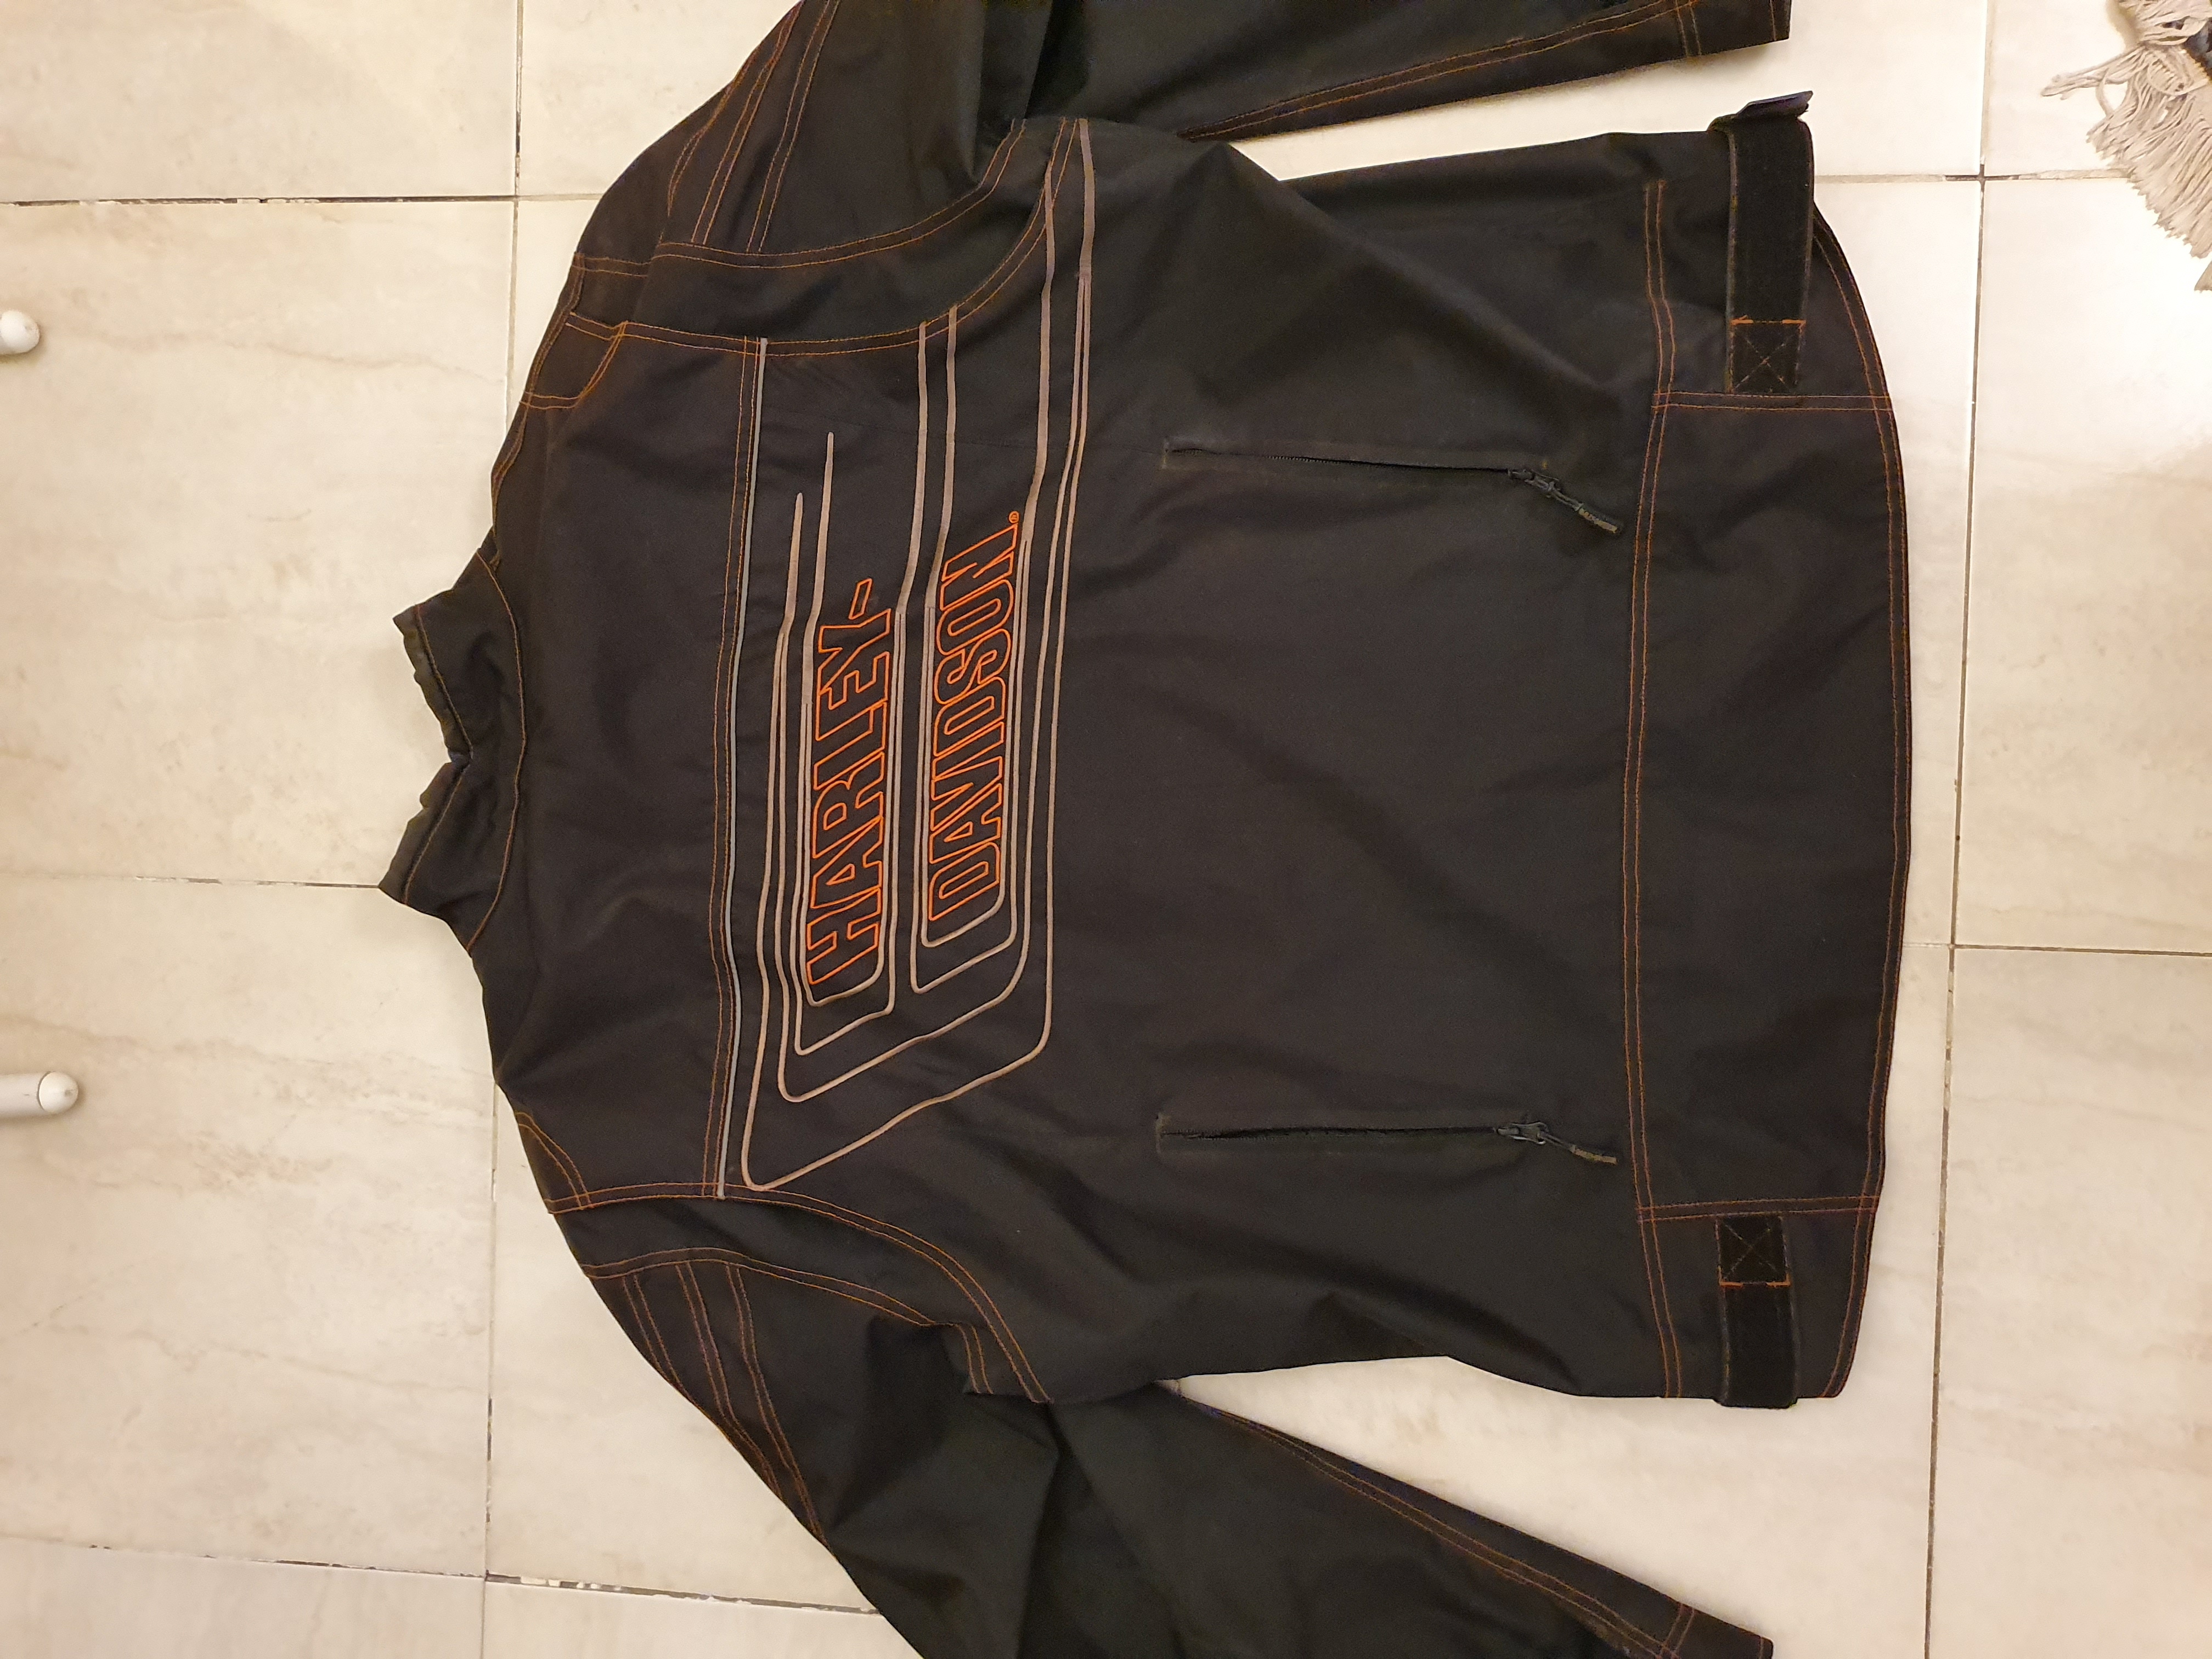 Harley Davidson -  Harley davidson safety jacket